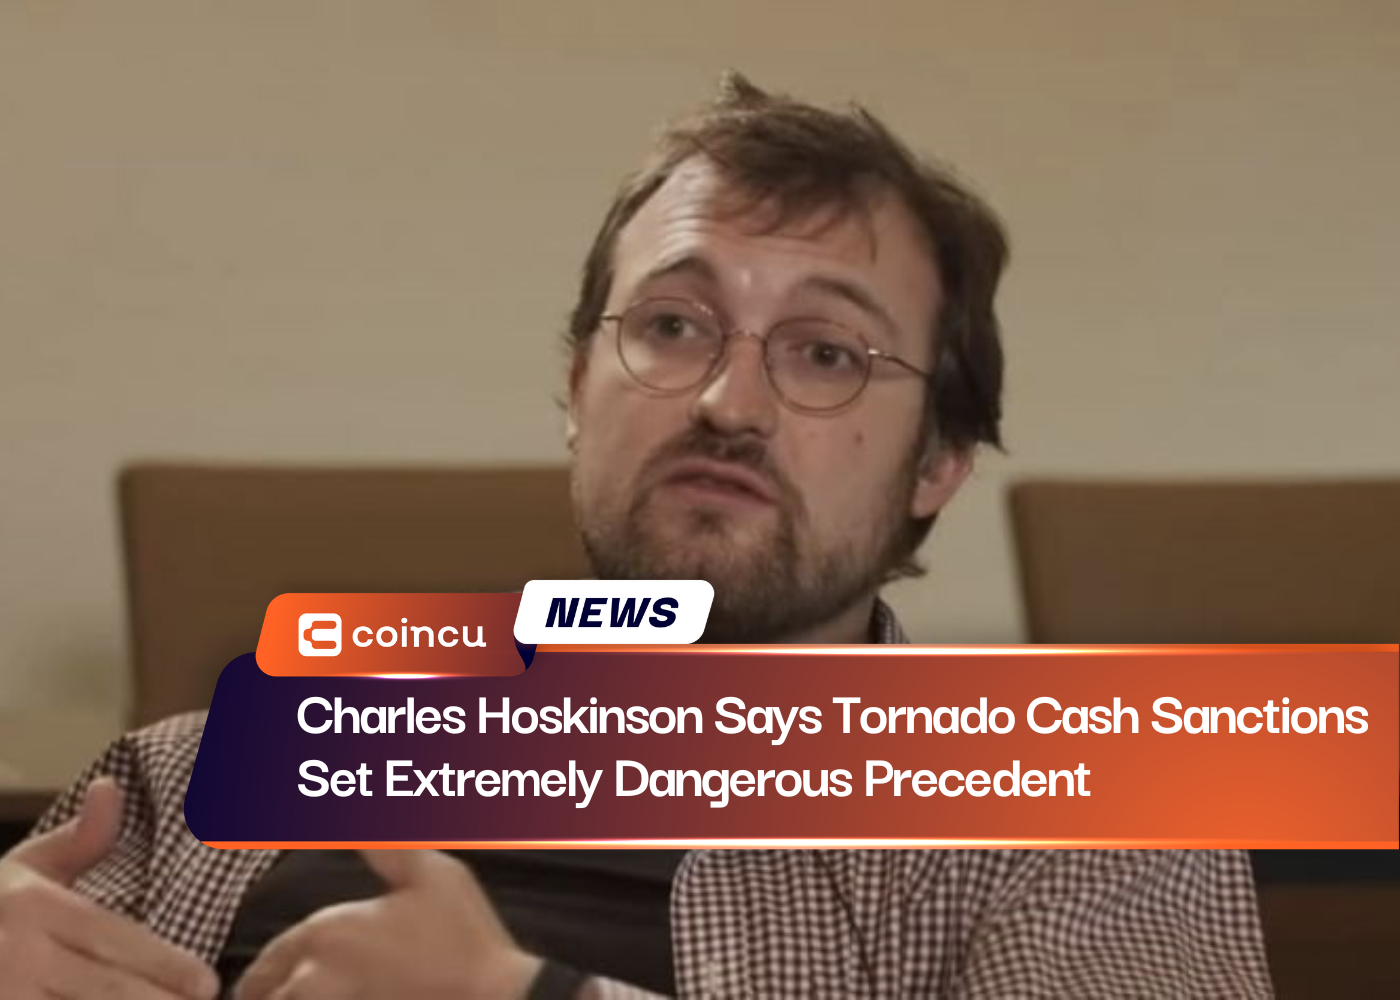 Charles Hoskinson Says Tornado Cash Sanctions Set Extremely Dangerous Precedent